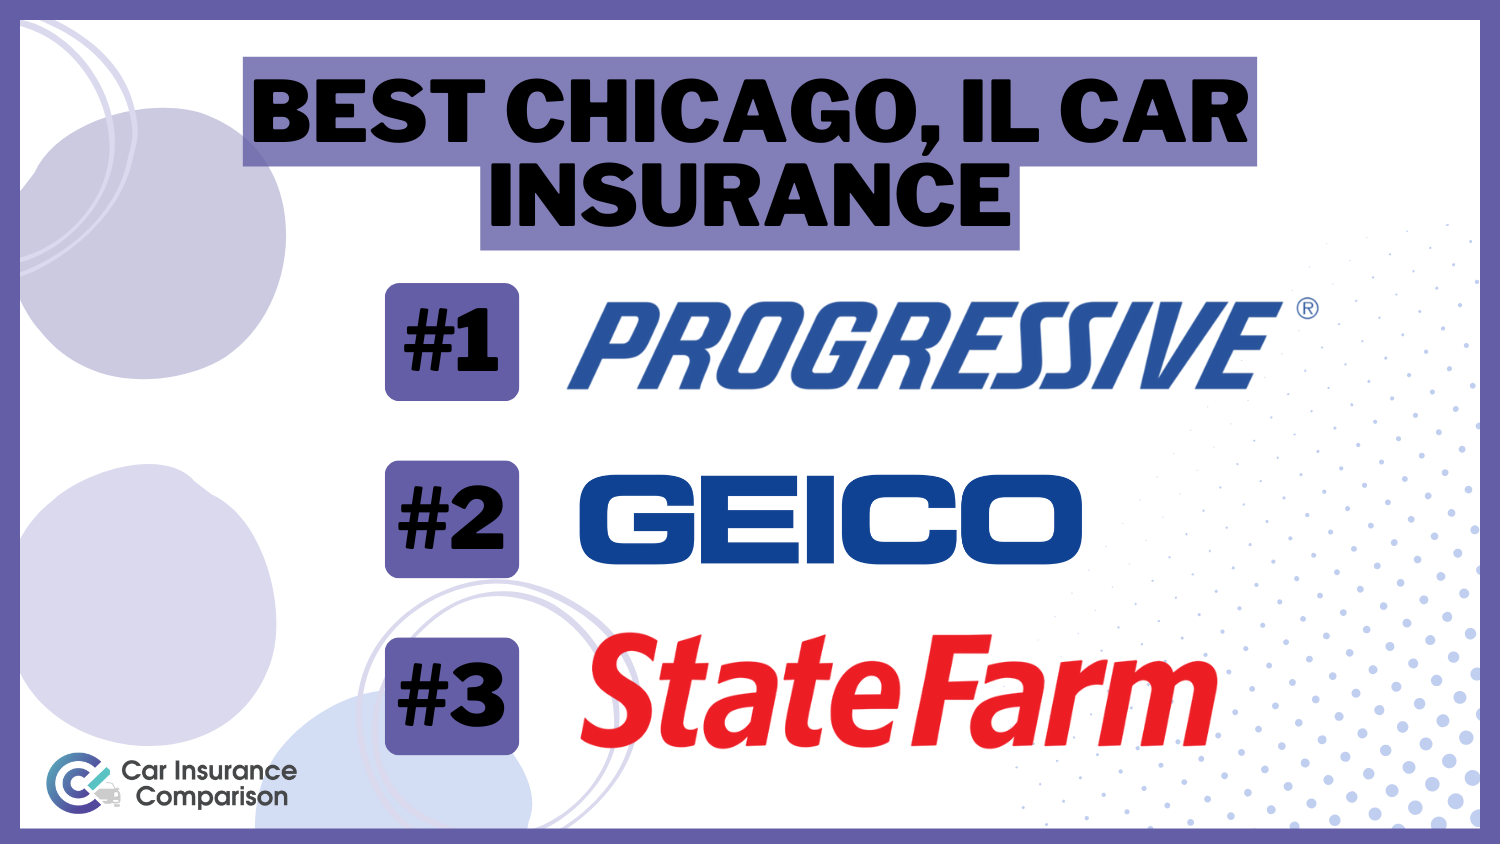 Best Chicago, IL Car Insurance: Progressive Geico, and State Farm